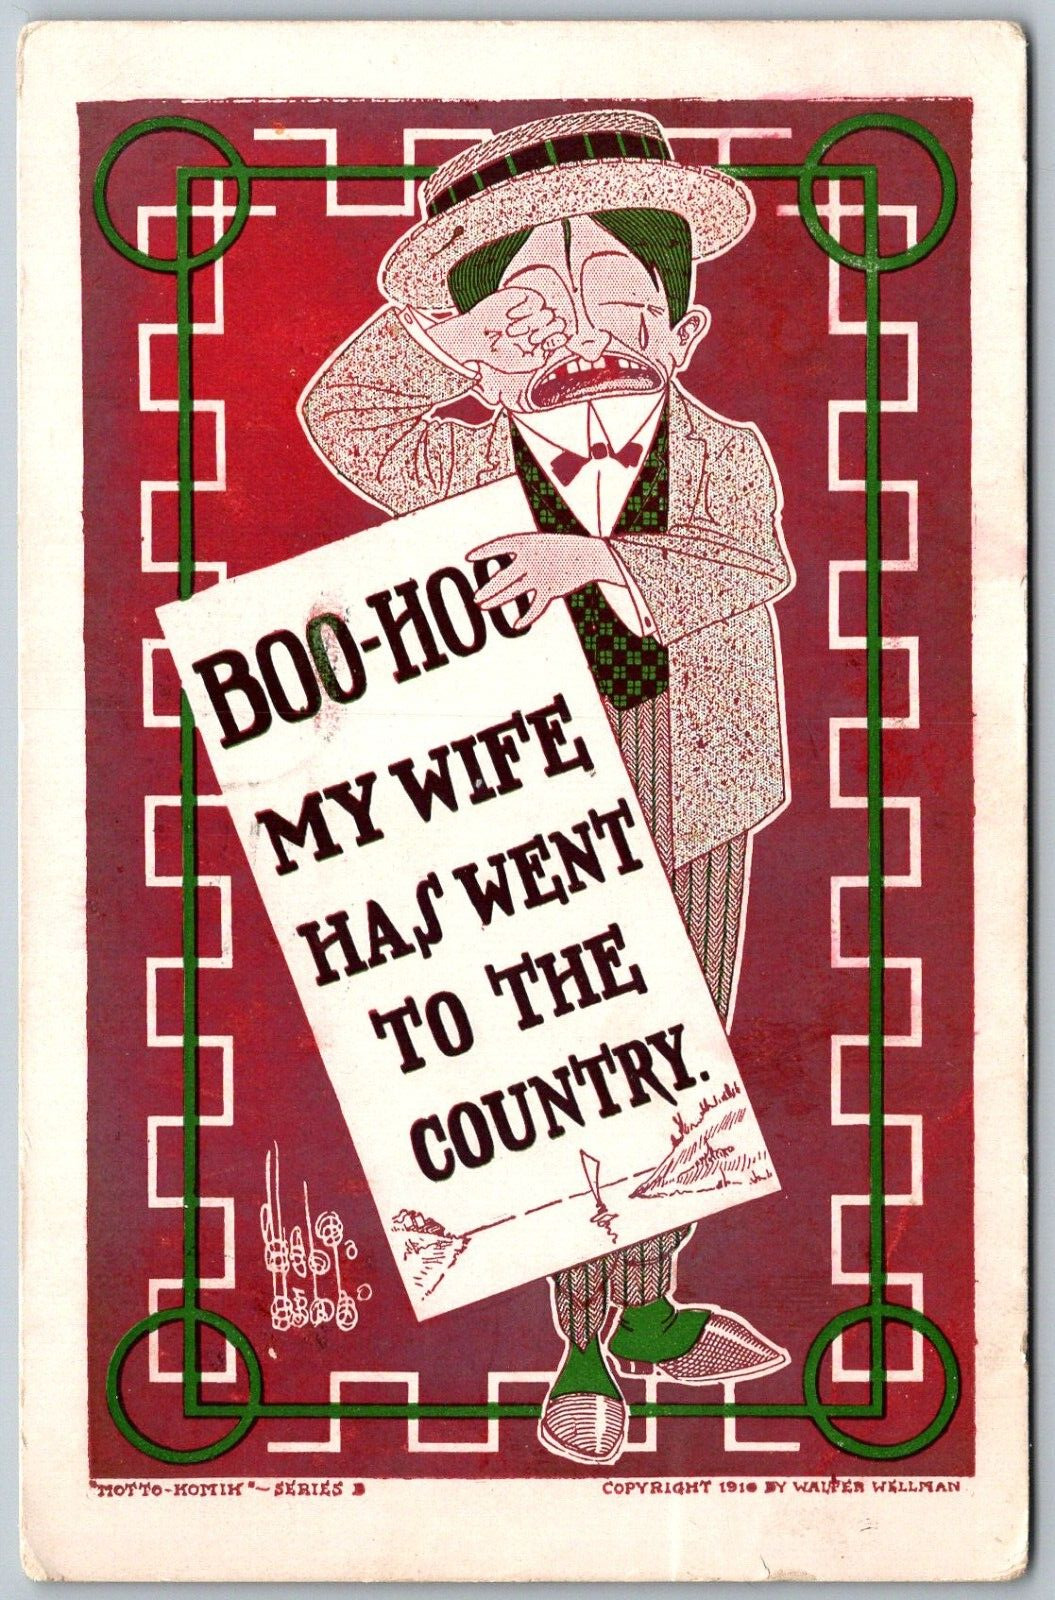 Boo Hoo My Wife Has Went To The Country 1910 Walter Wellman Motto Komik Postcard